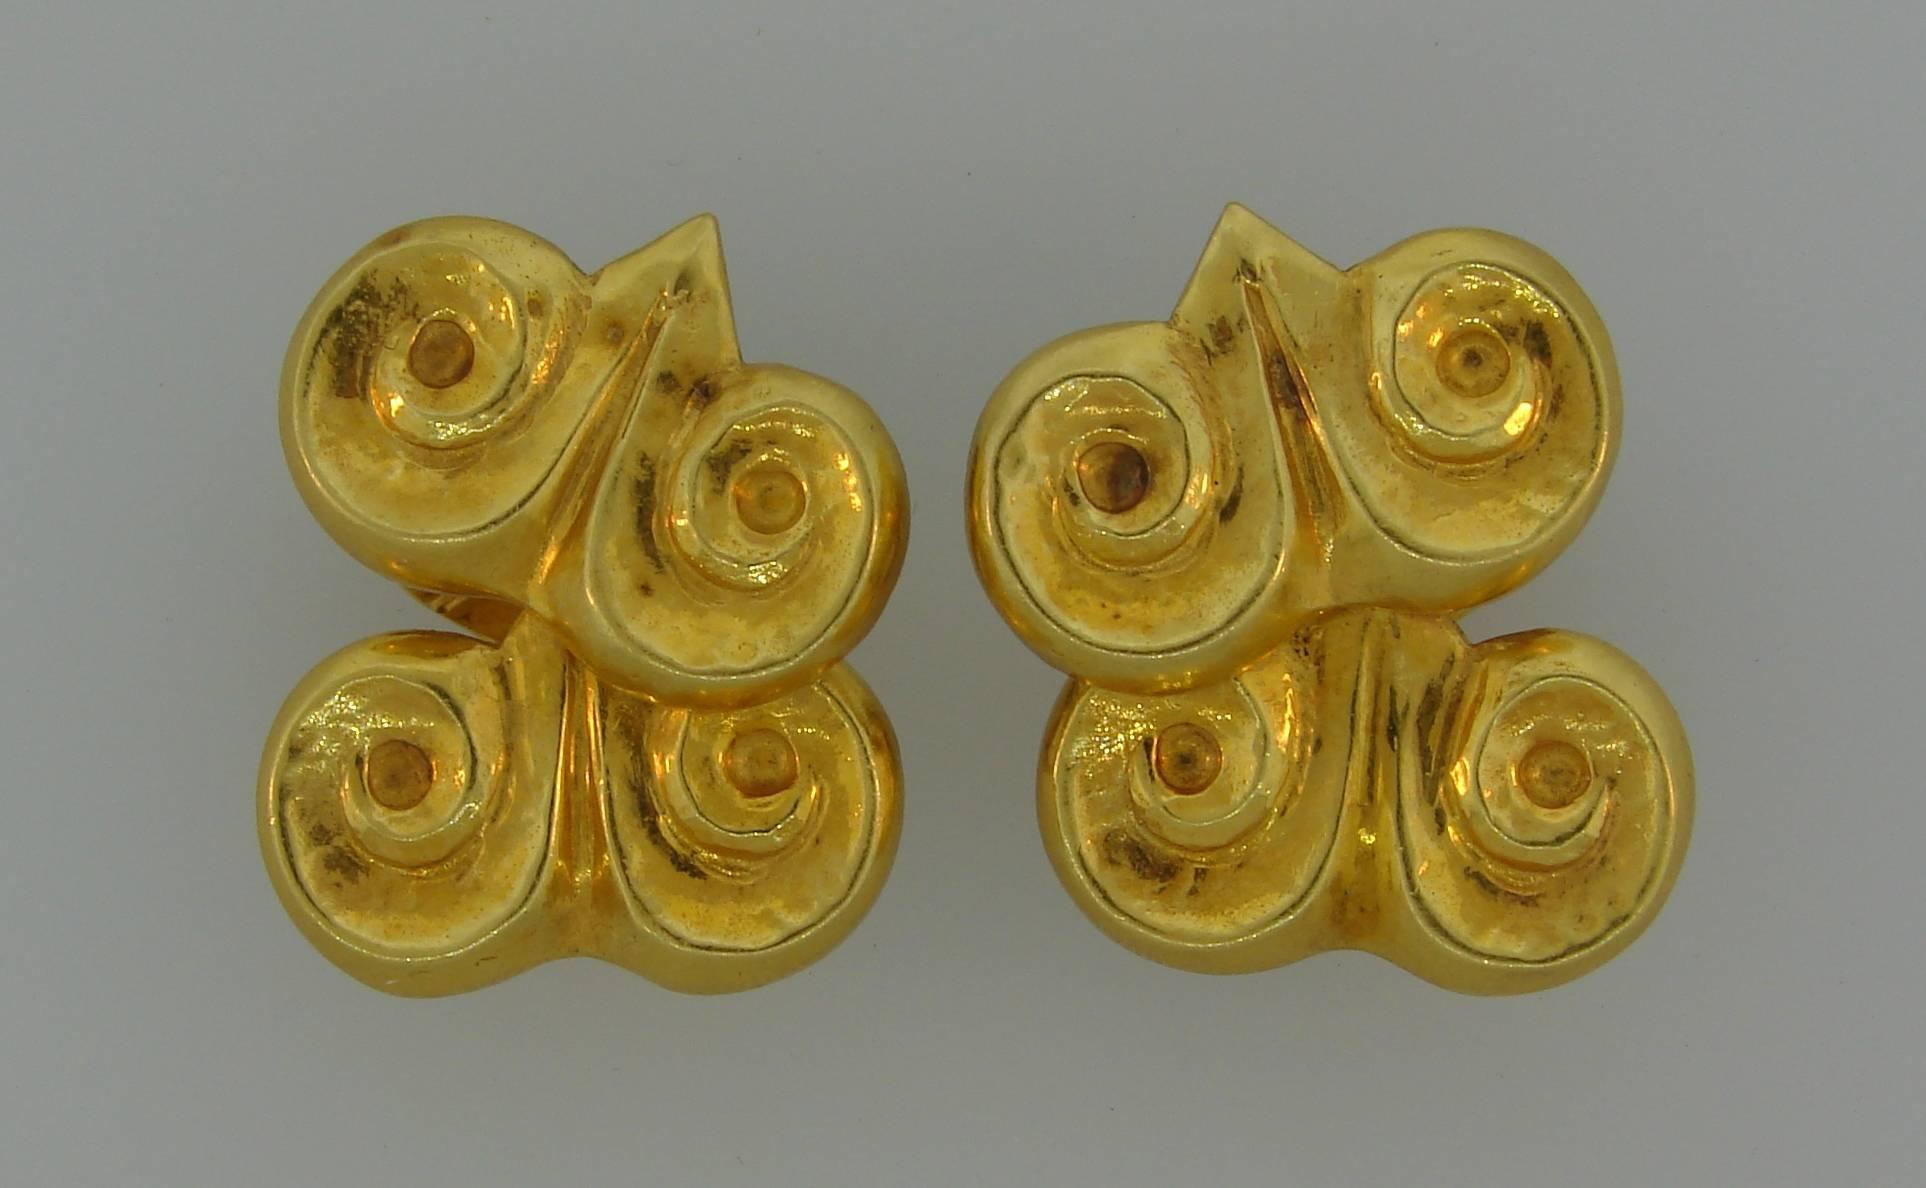 Zolotas 22 Karat Yellow Gold Necklace and Earrings Set 3